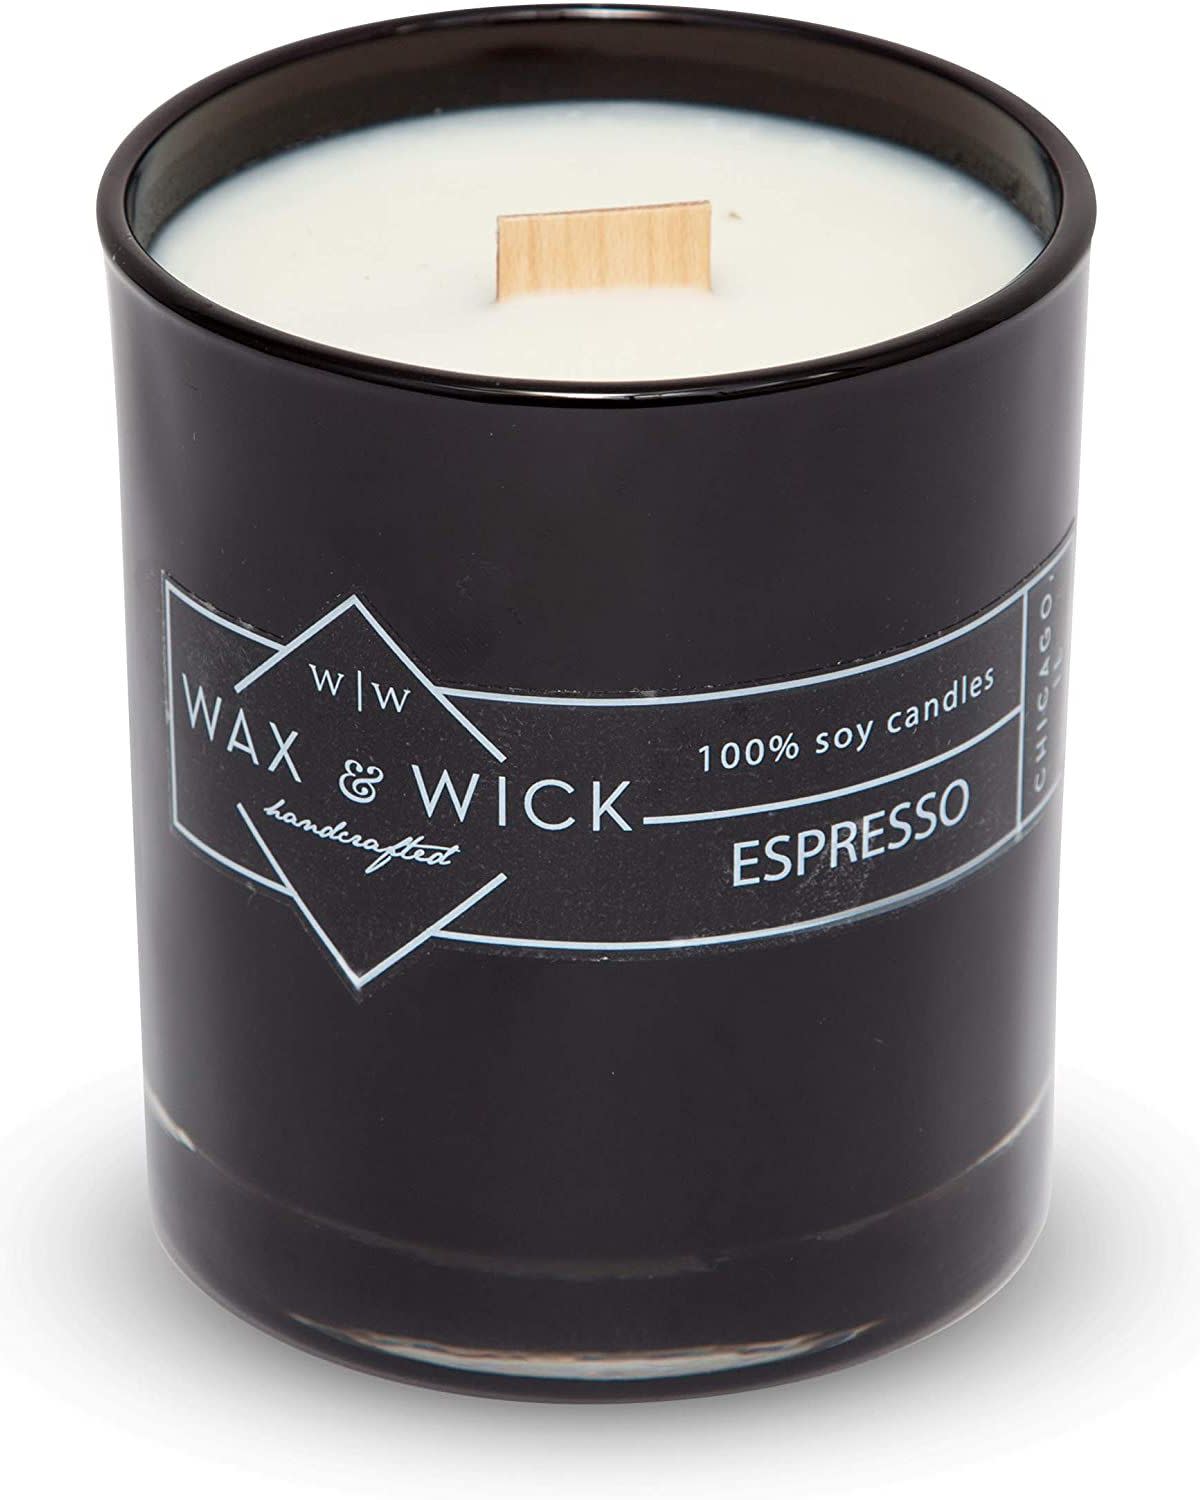 Wax + Wick Espresso Soy Candle